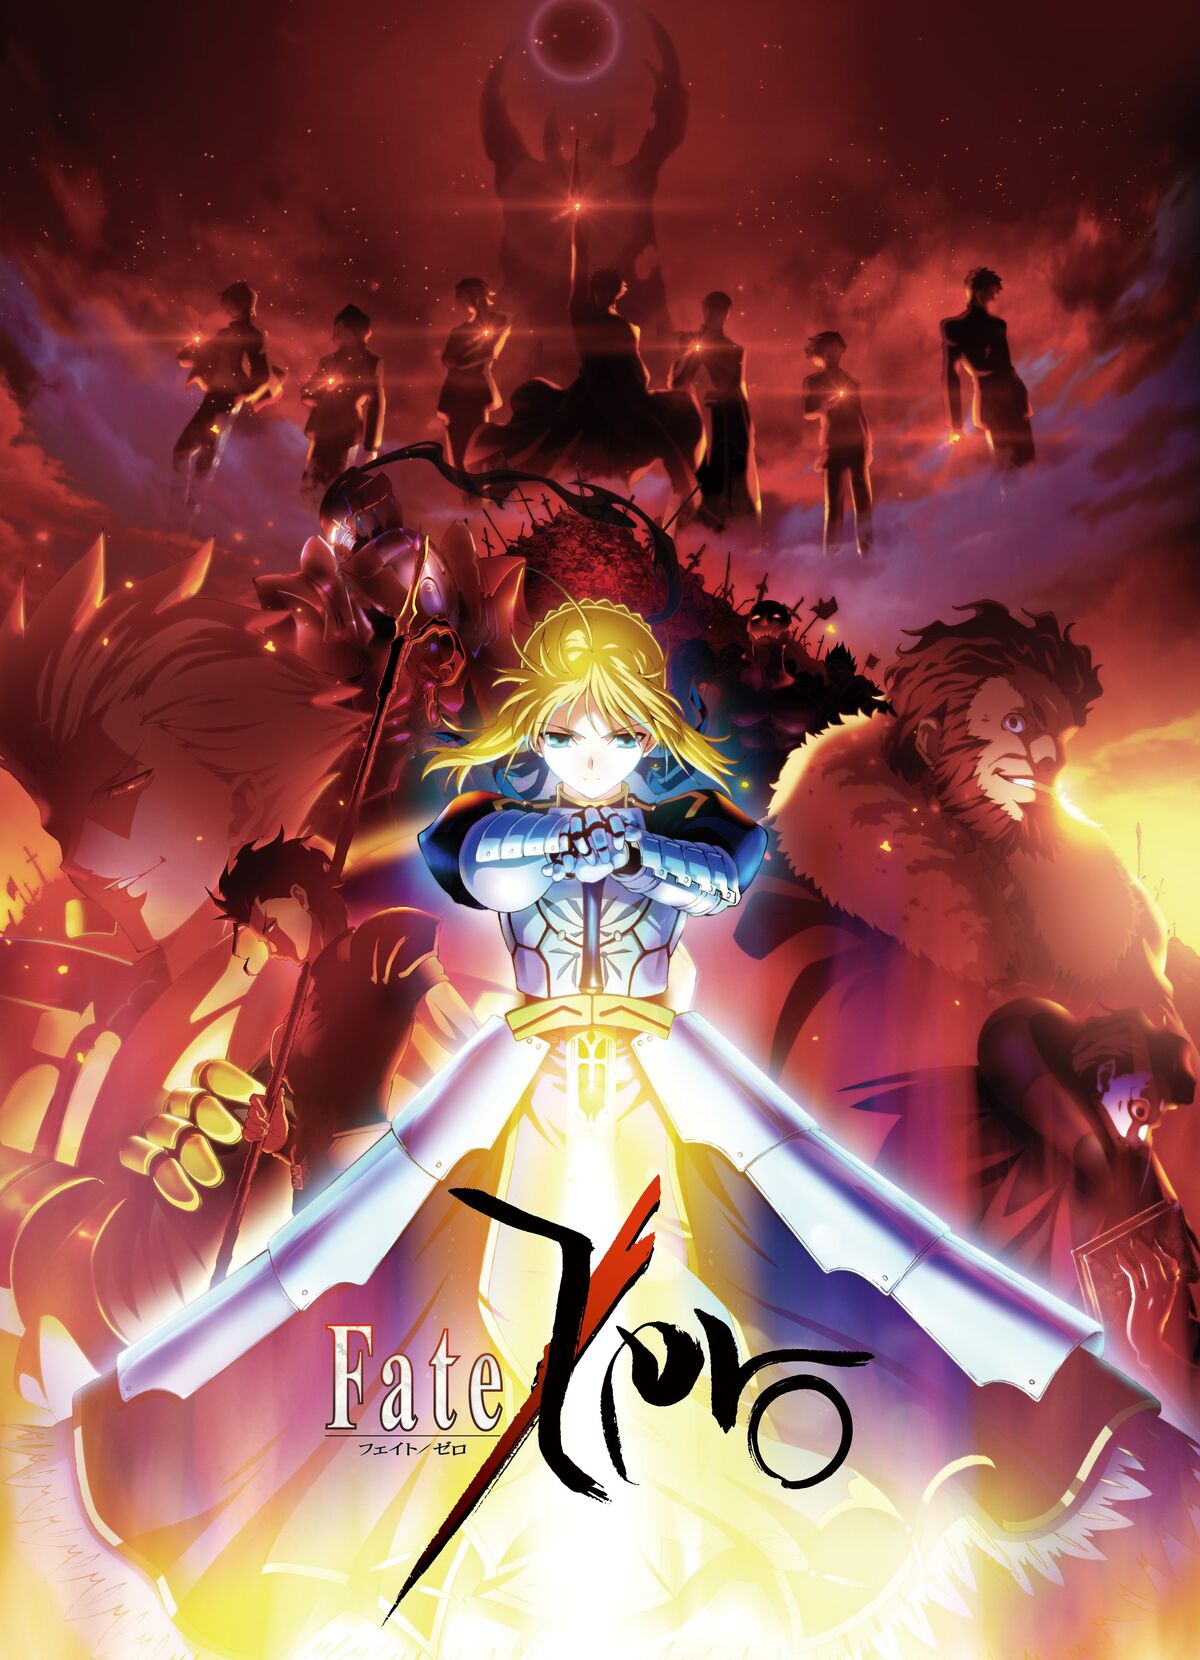 New Fate TV Anime Announced